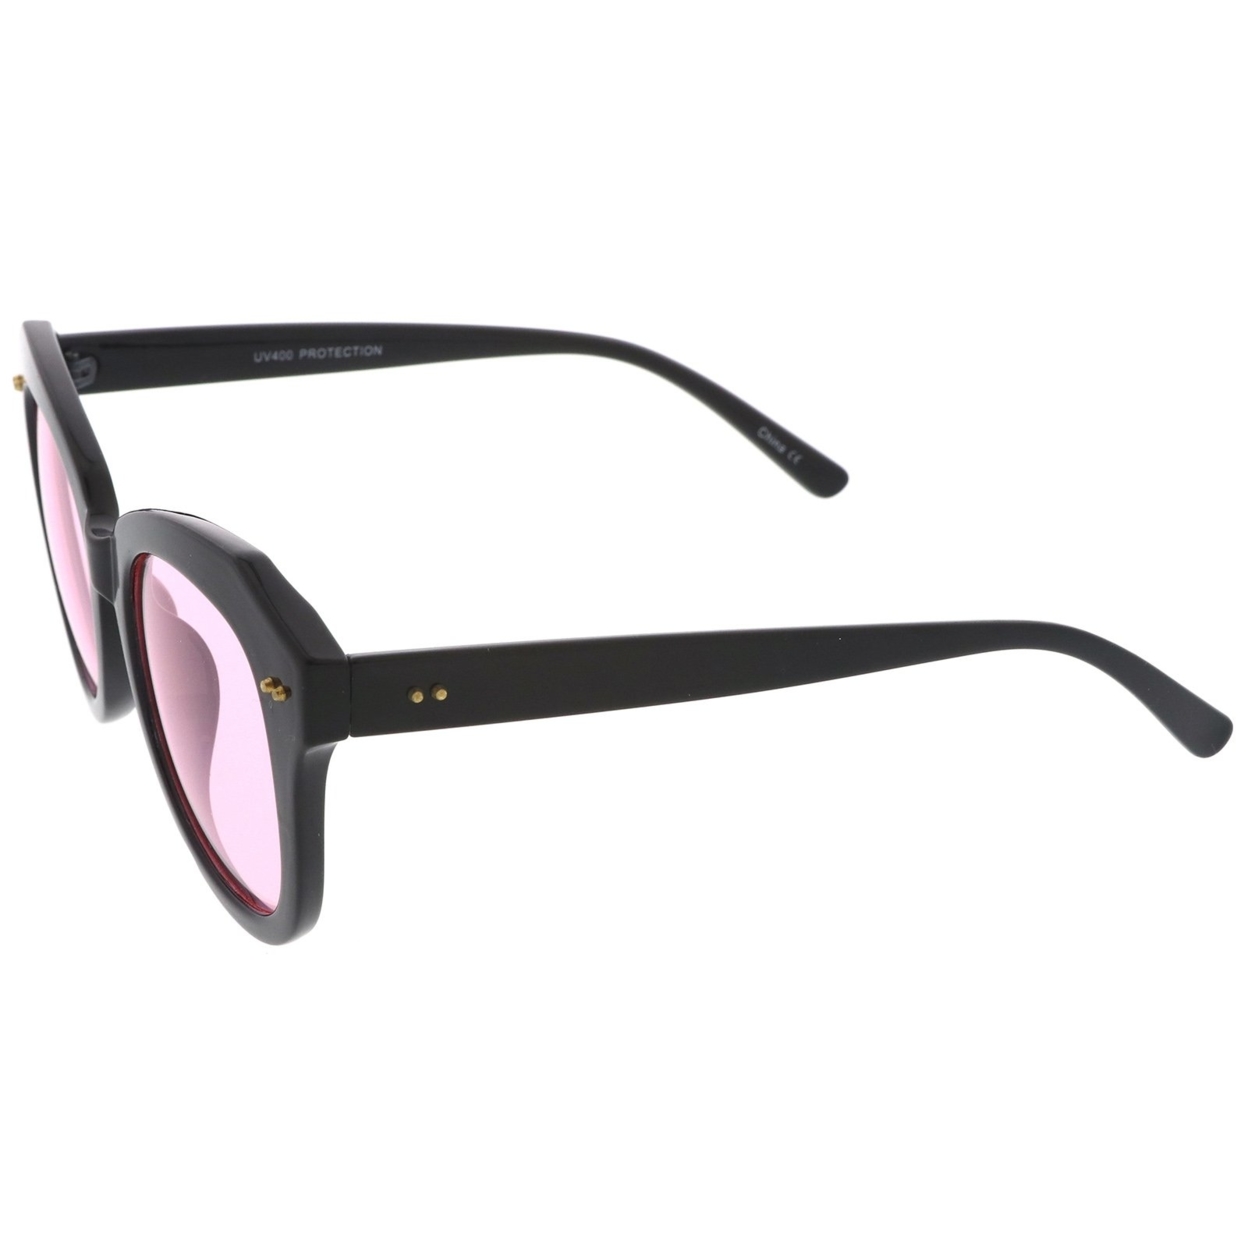 Women's Oversize Horn Rimmed Colored Round Lens Cat Eye Sunglasses 52mm - Black / Pink